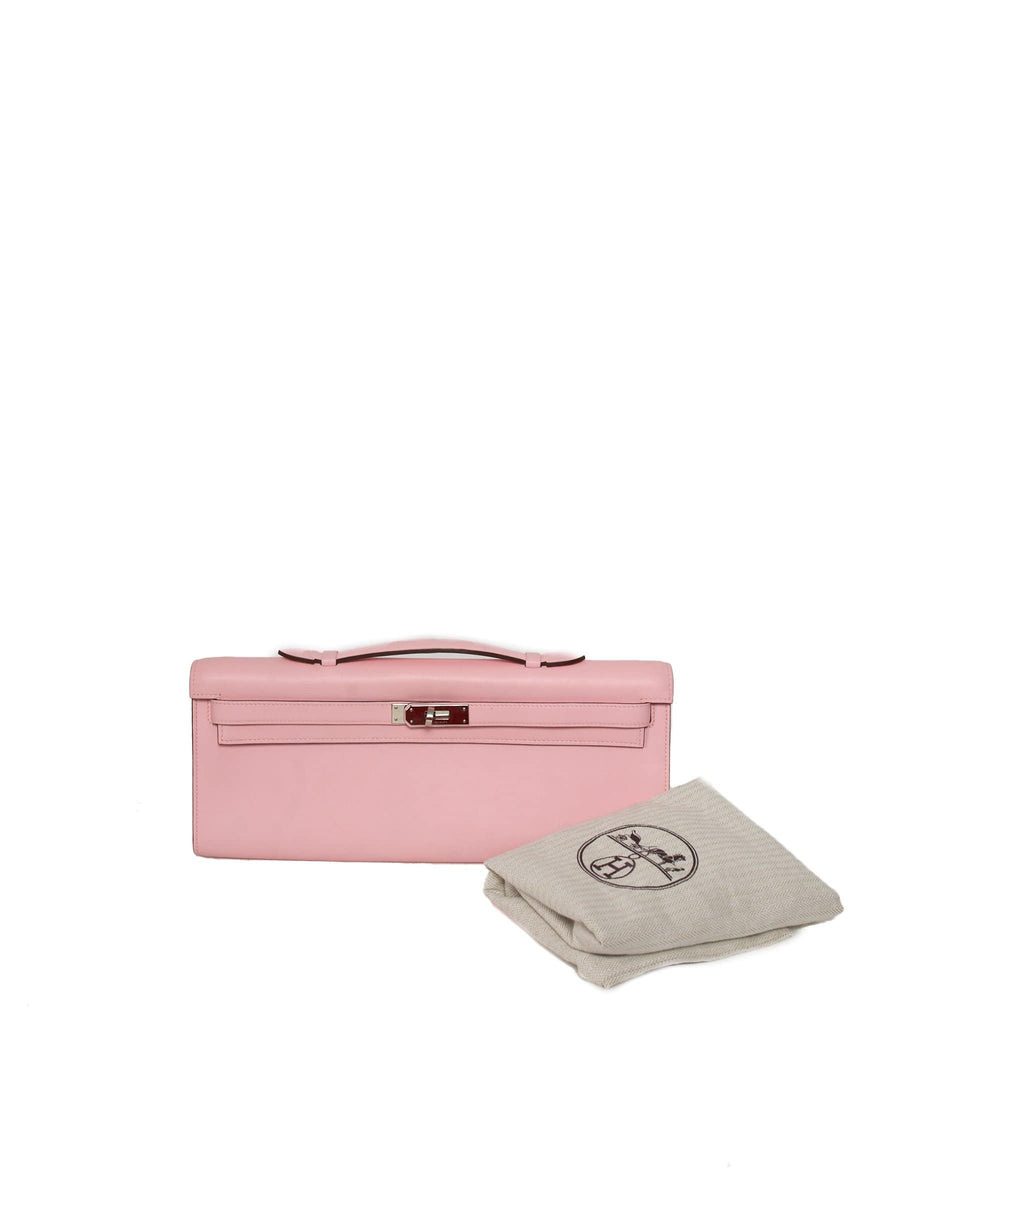 Hermès Rose Dragee Kelly Cut Bag